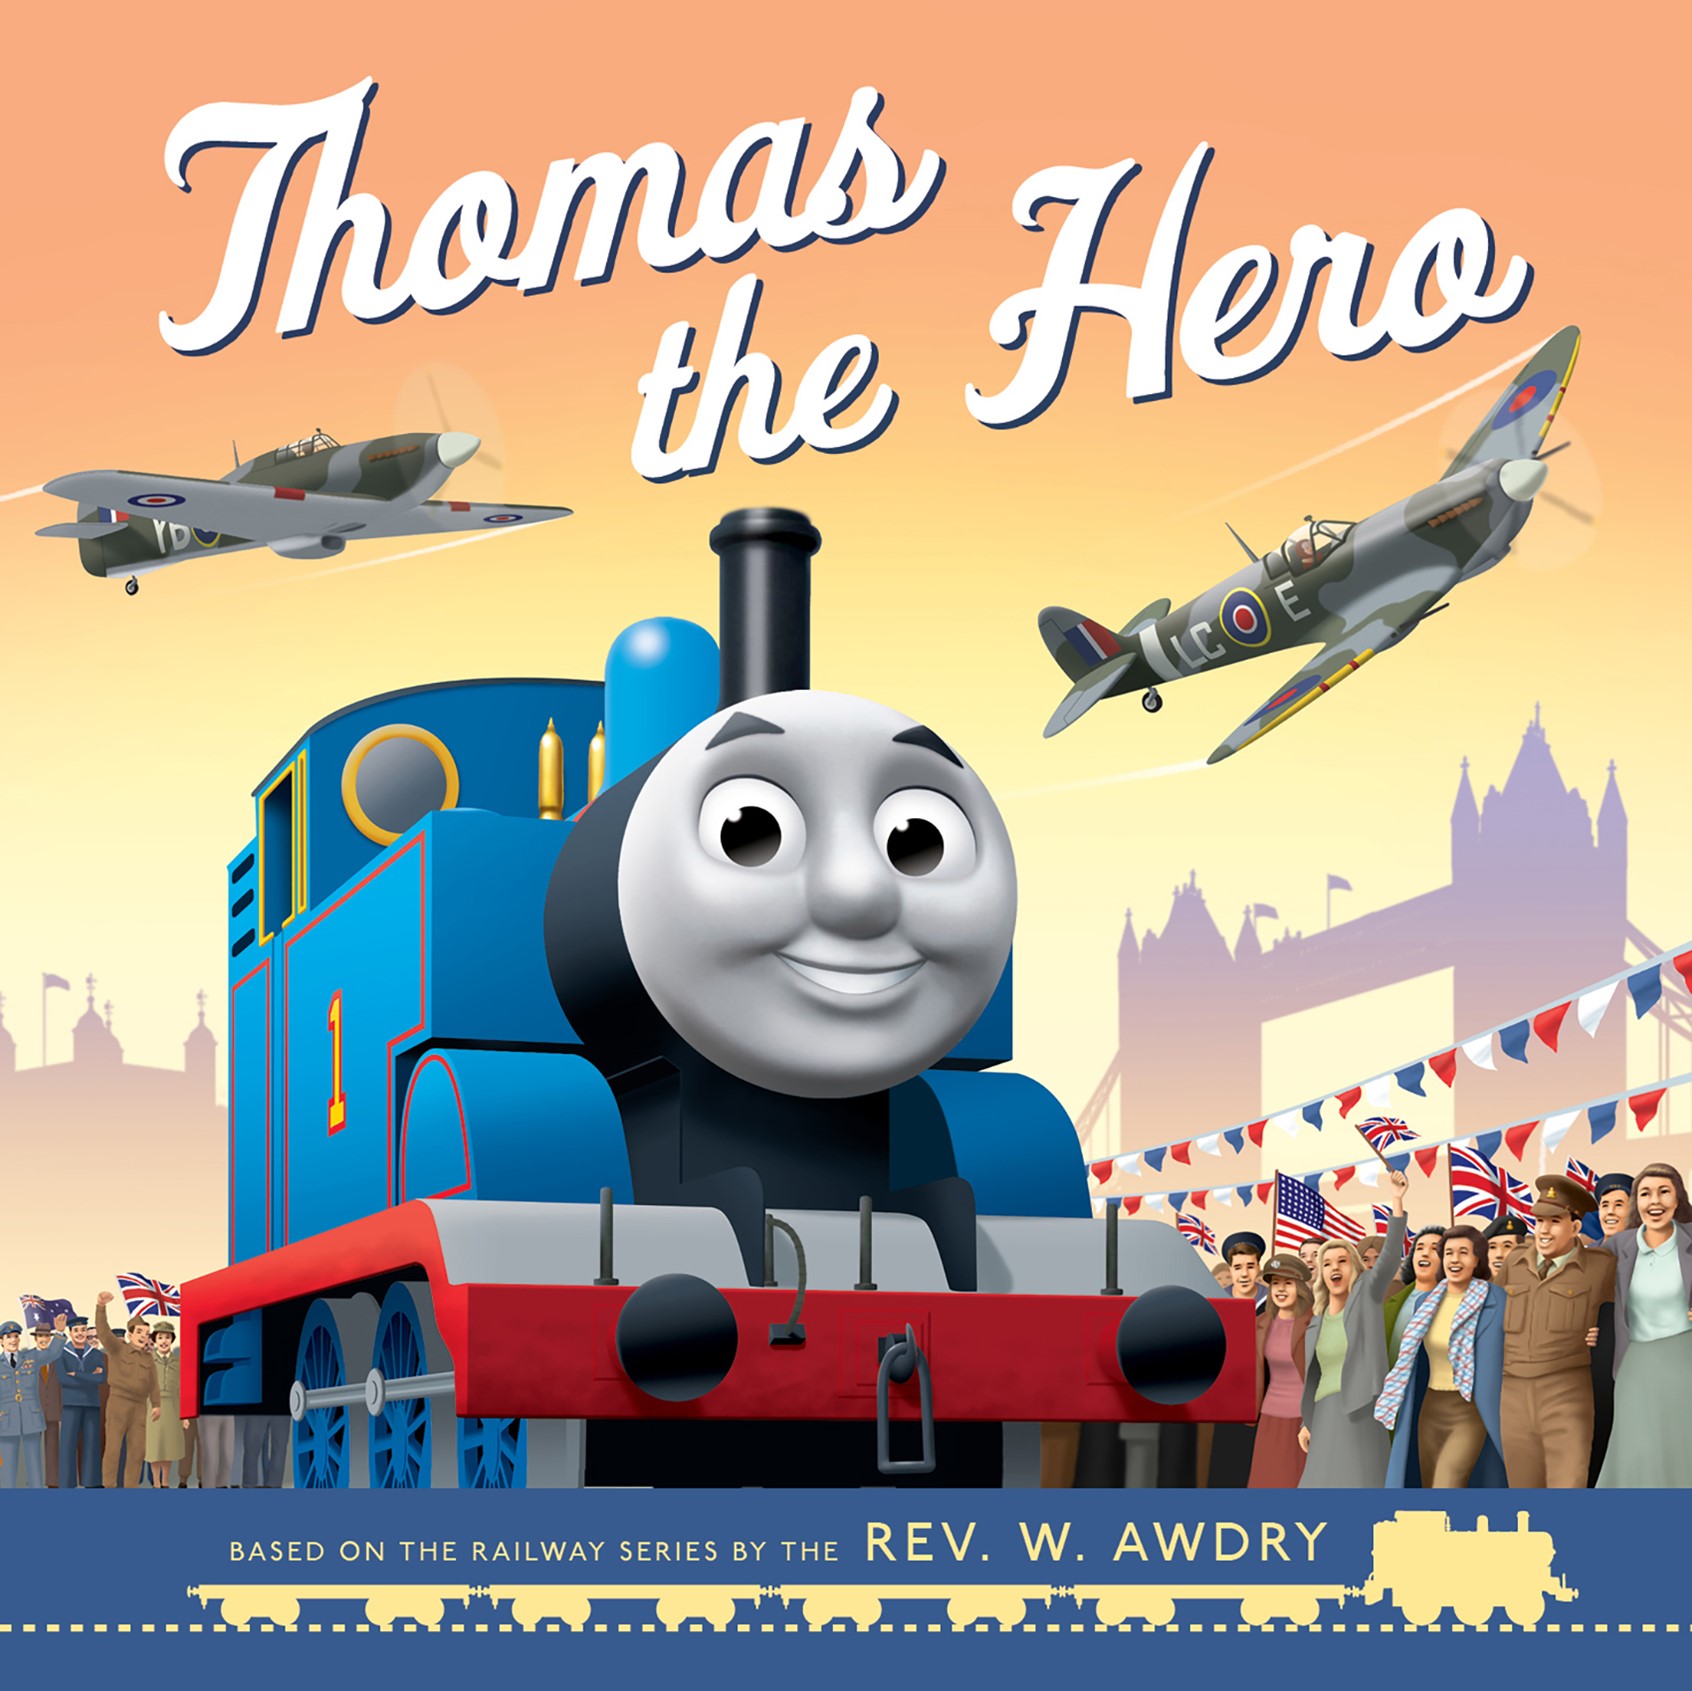 Robin Davies illustration of Thomas the train